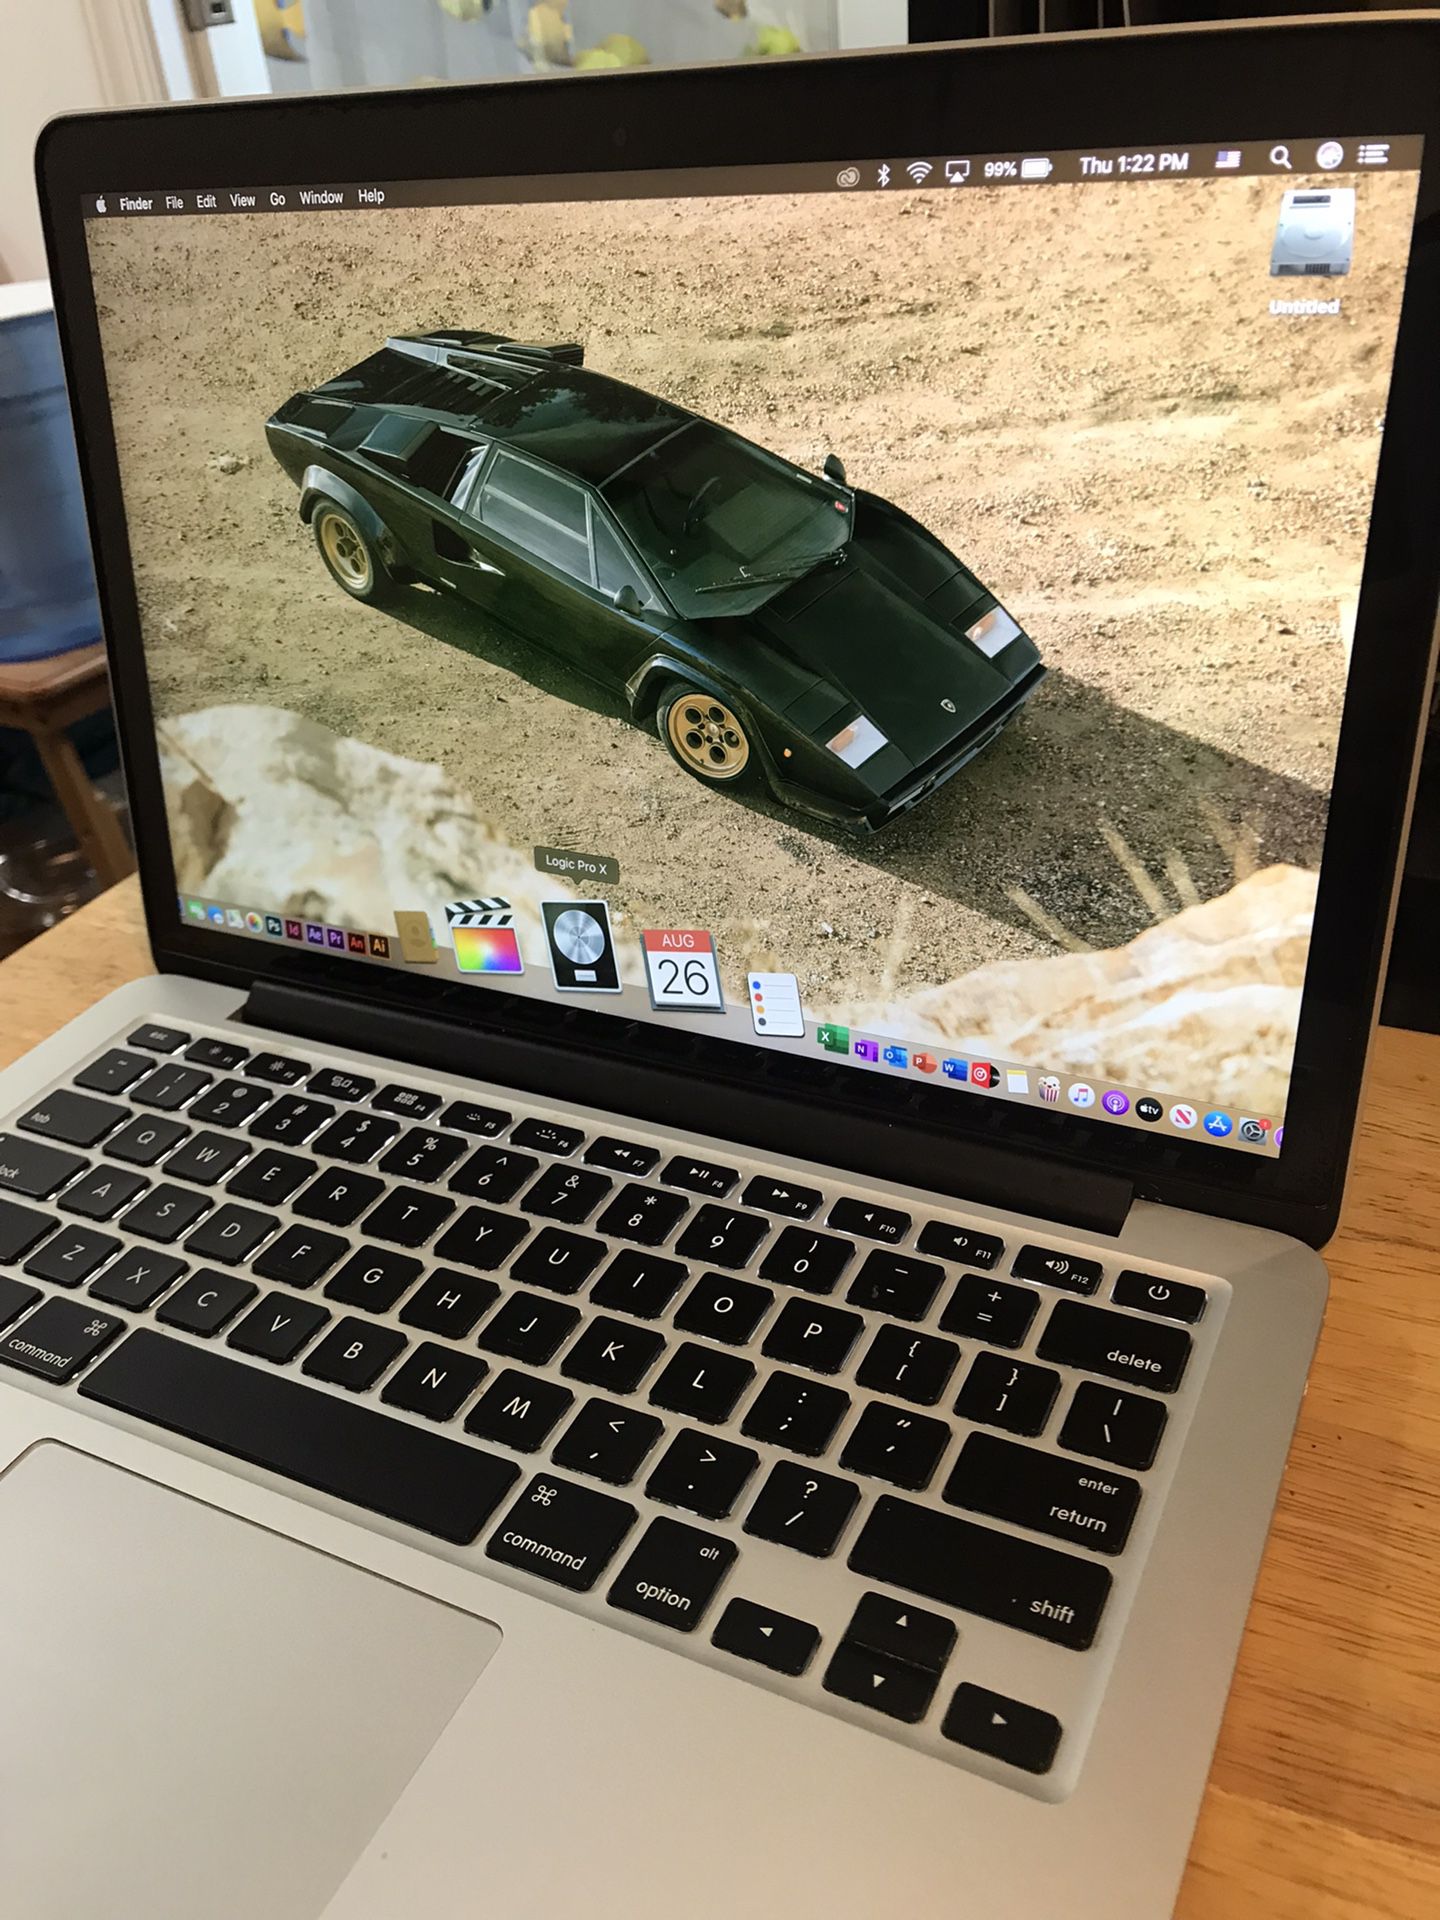 2014 MacBook Pro  Retina Intel i5,8Gb, 256Gb/1Tb,13” Screen,WiFi, Catalina, Logic Pro,Photoshop,Final Cut Pro,Office for Great Sale